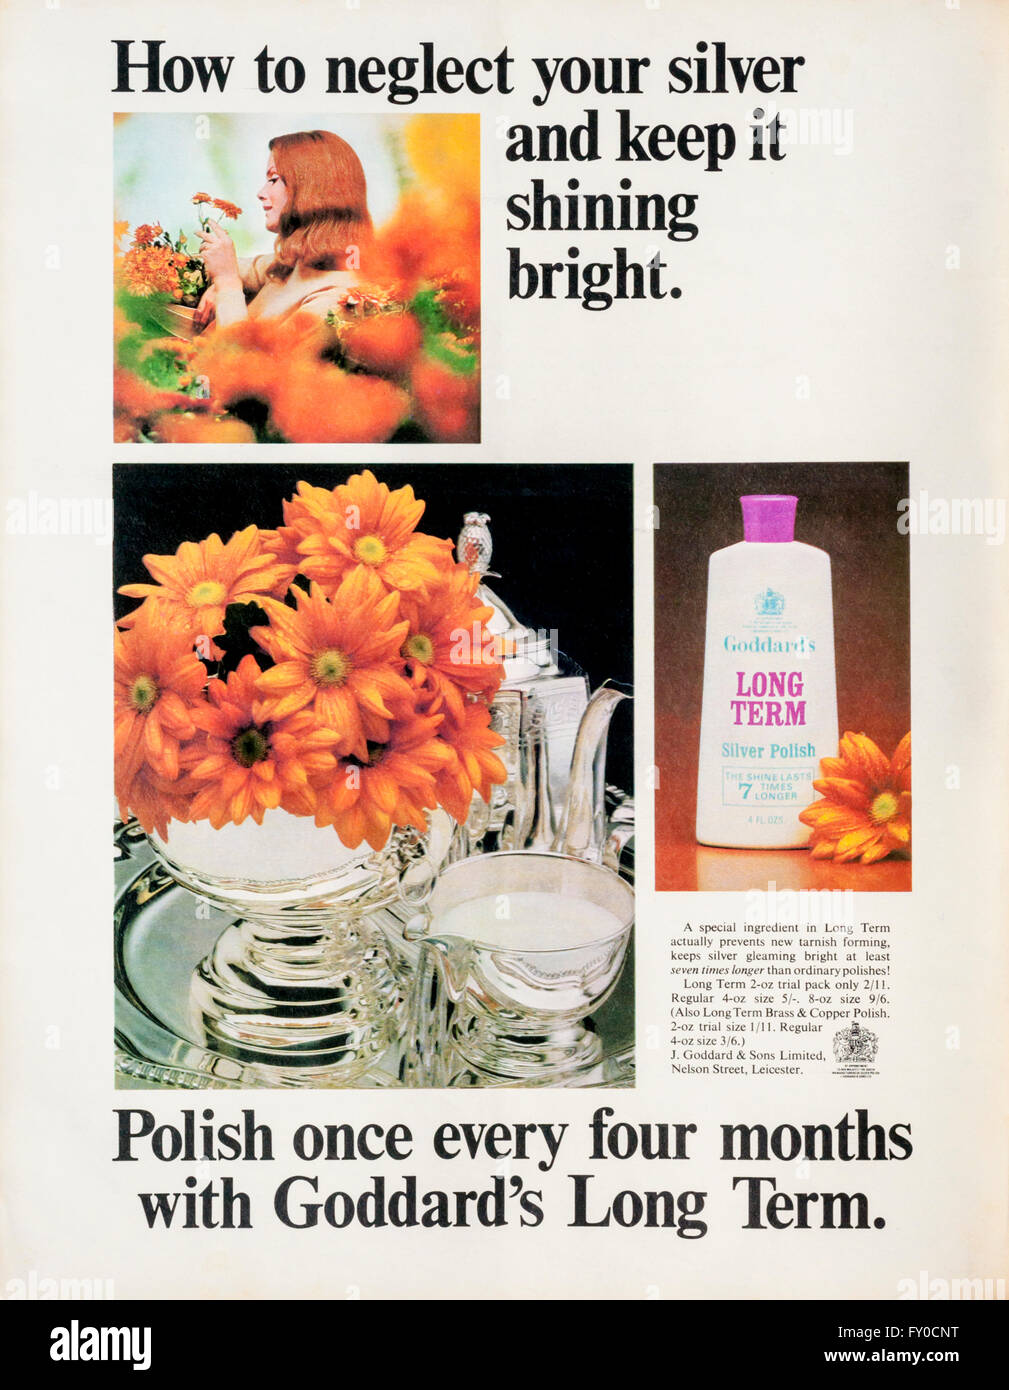 1960s magazine advertisement advertising Goddard's Long Term Silver Polish. Stock Photo